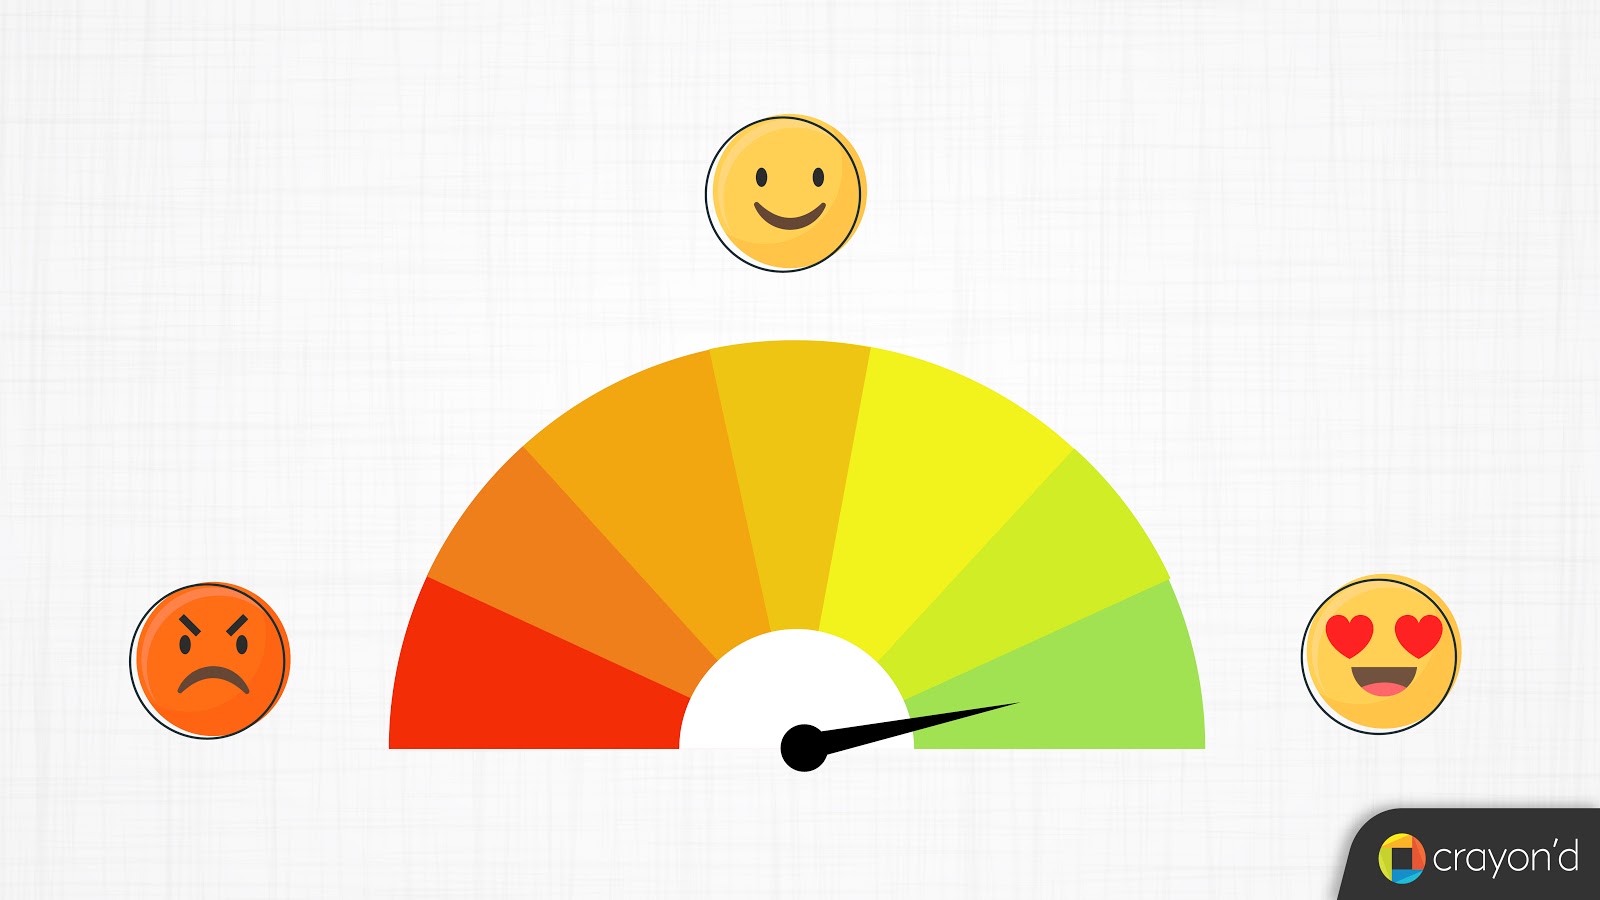 Customer satisfaction metrics